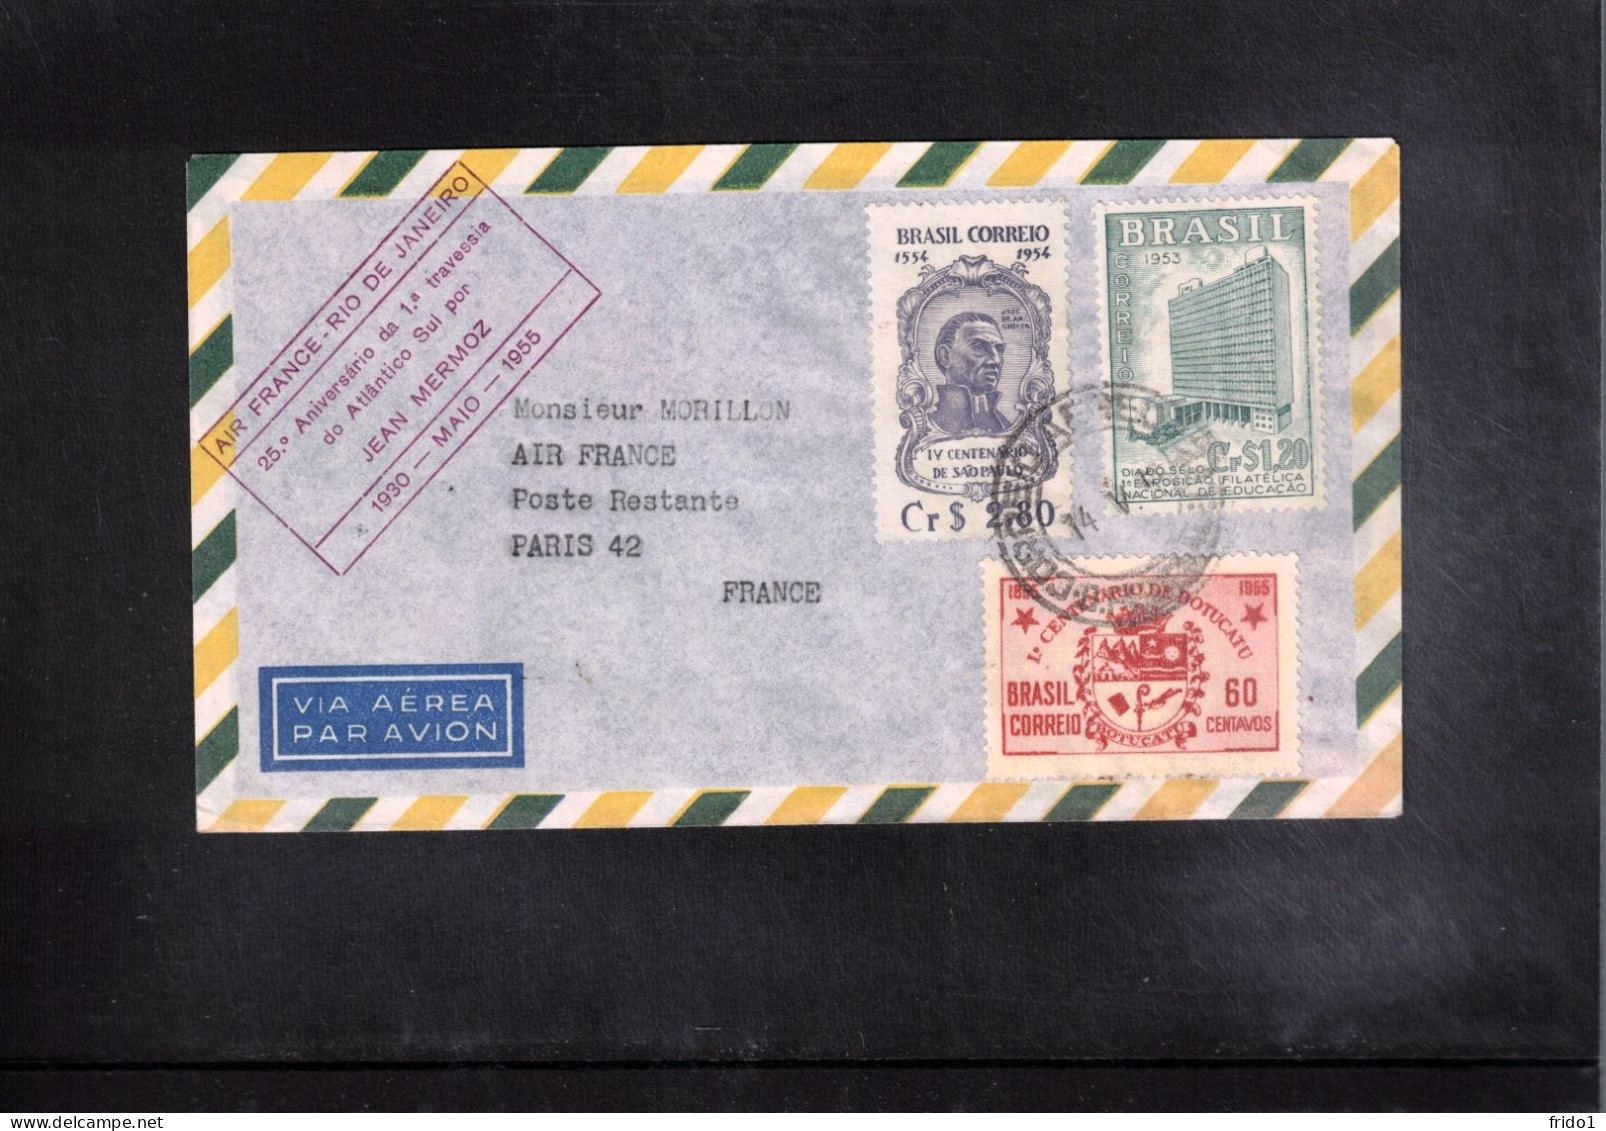 Brazil 1955 25th Anniversary Of The First Crossing Of Atlantic Rio De Janeiro - Paris By Air France Jean Mermoz - Storia Postale